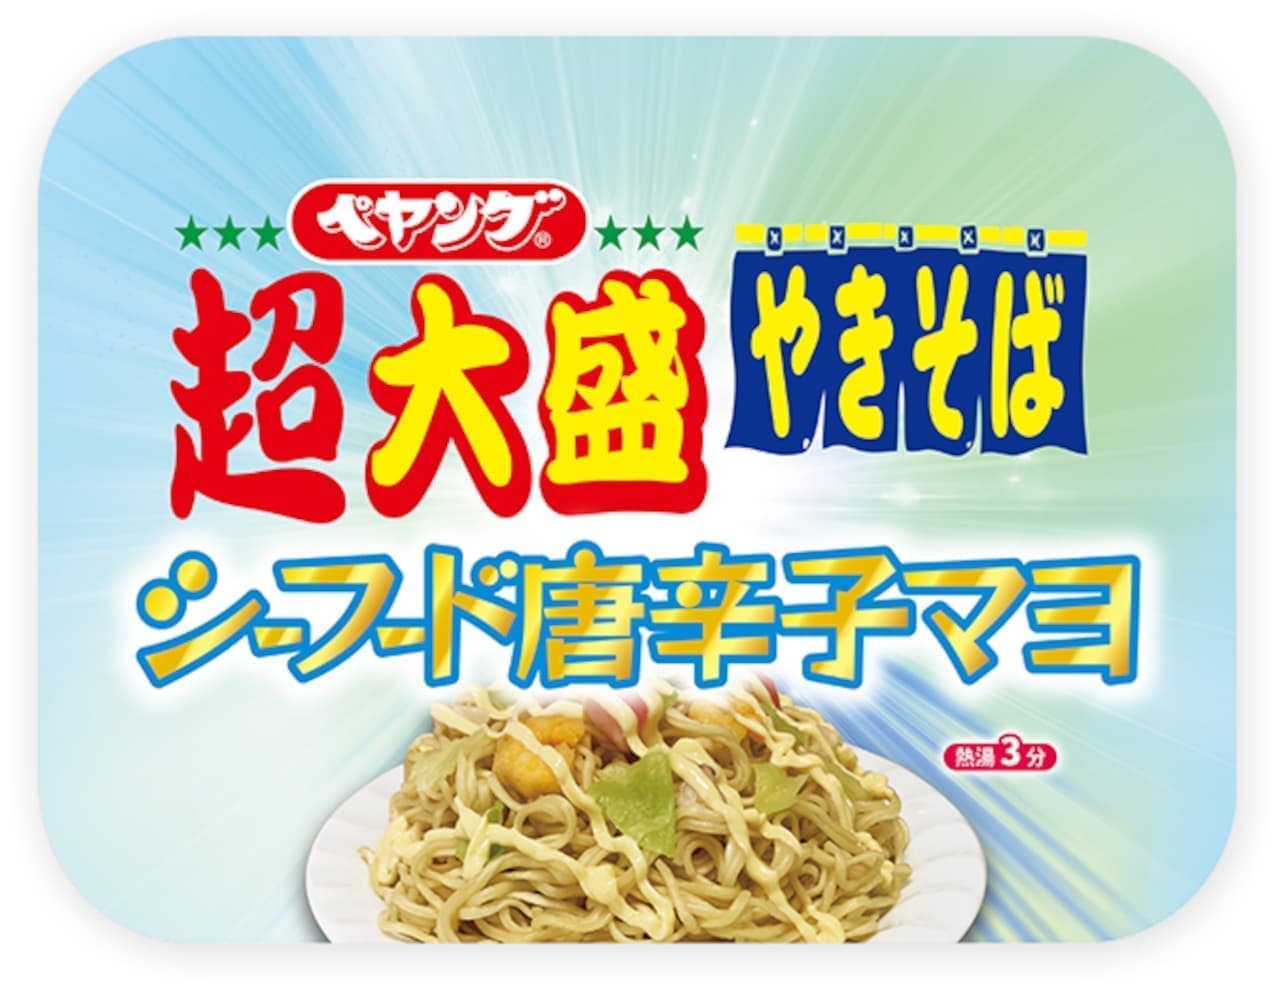 Maruka Shokuhin "Peyoung Super Daishoku Seafood Chili Mayo Yakisoba